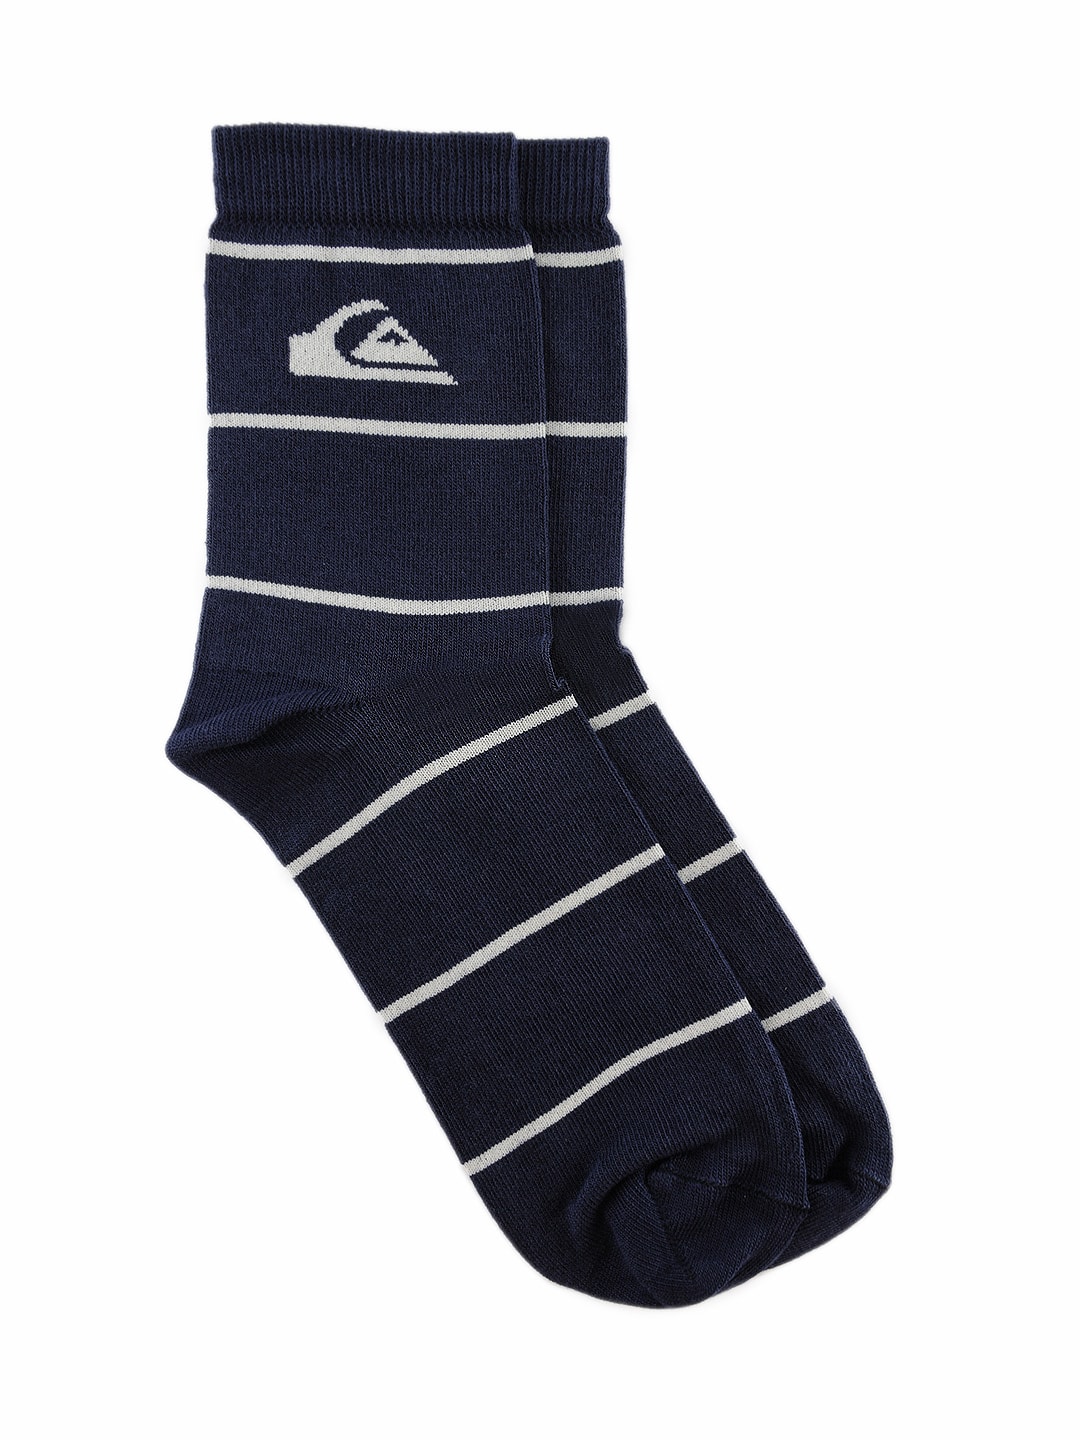 Quiksilver Men Navy Blue Socks